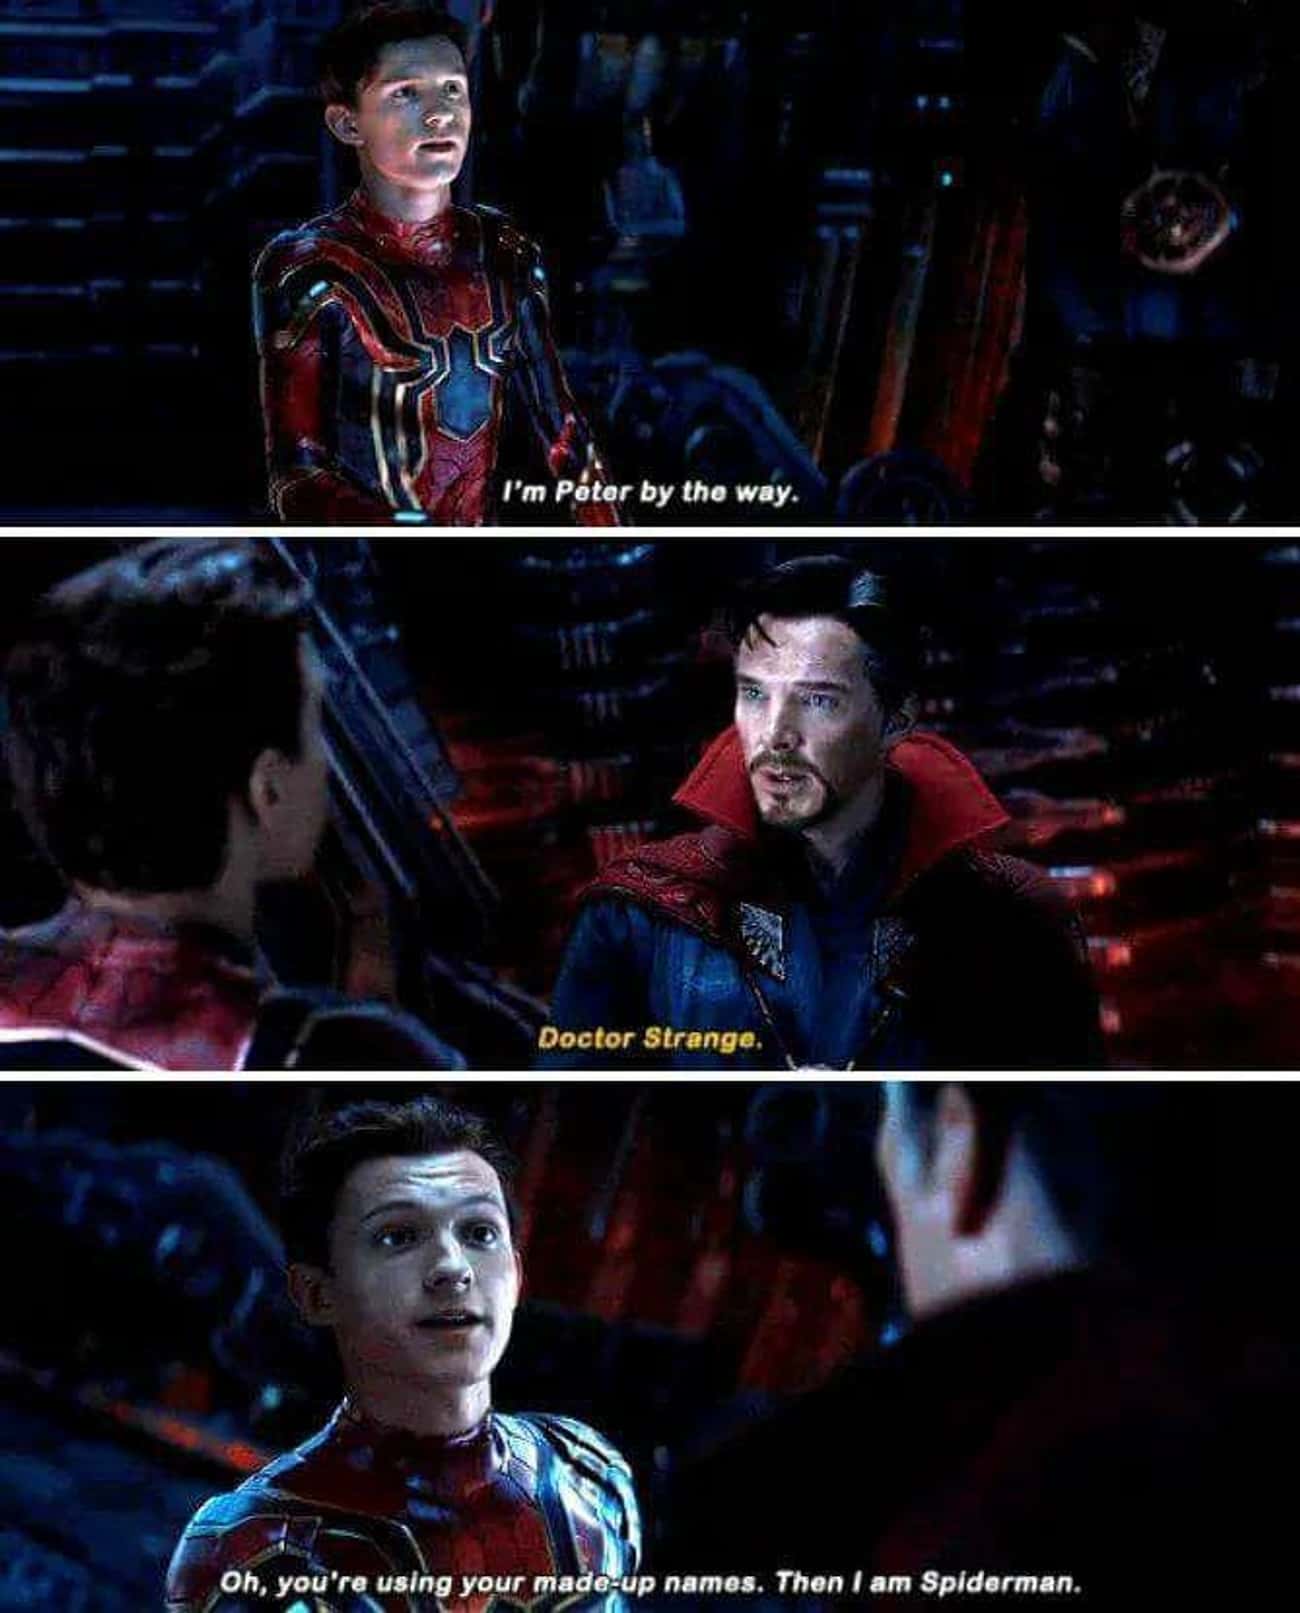 Spider-Man And Dr. Strange Meet As Stowaways ('Avengers: Infinity War')